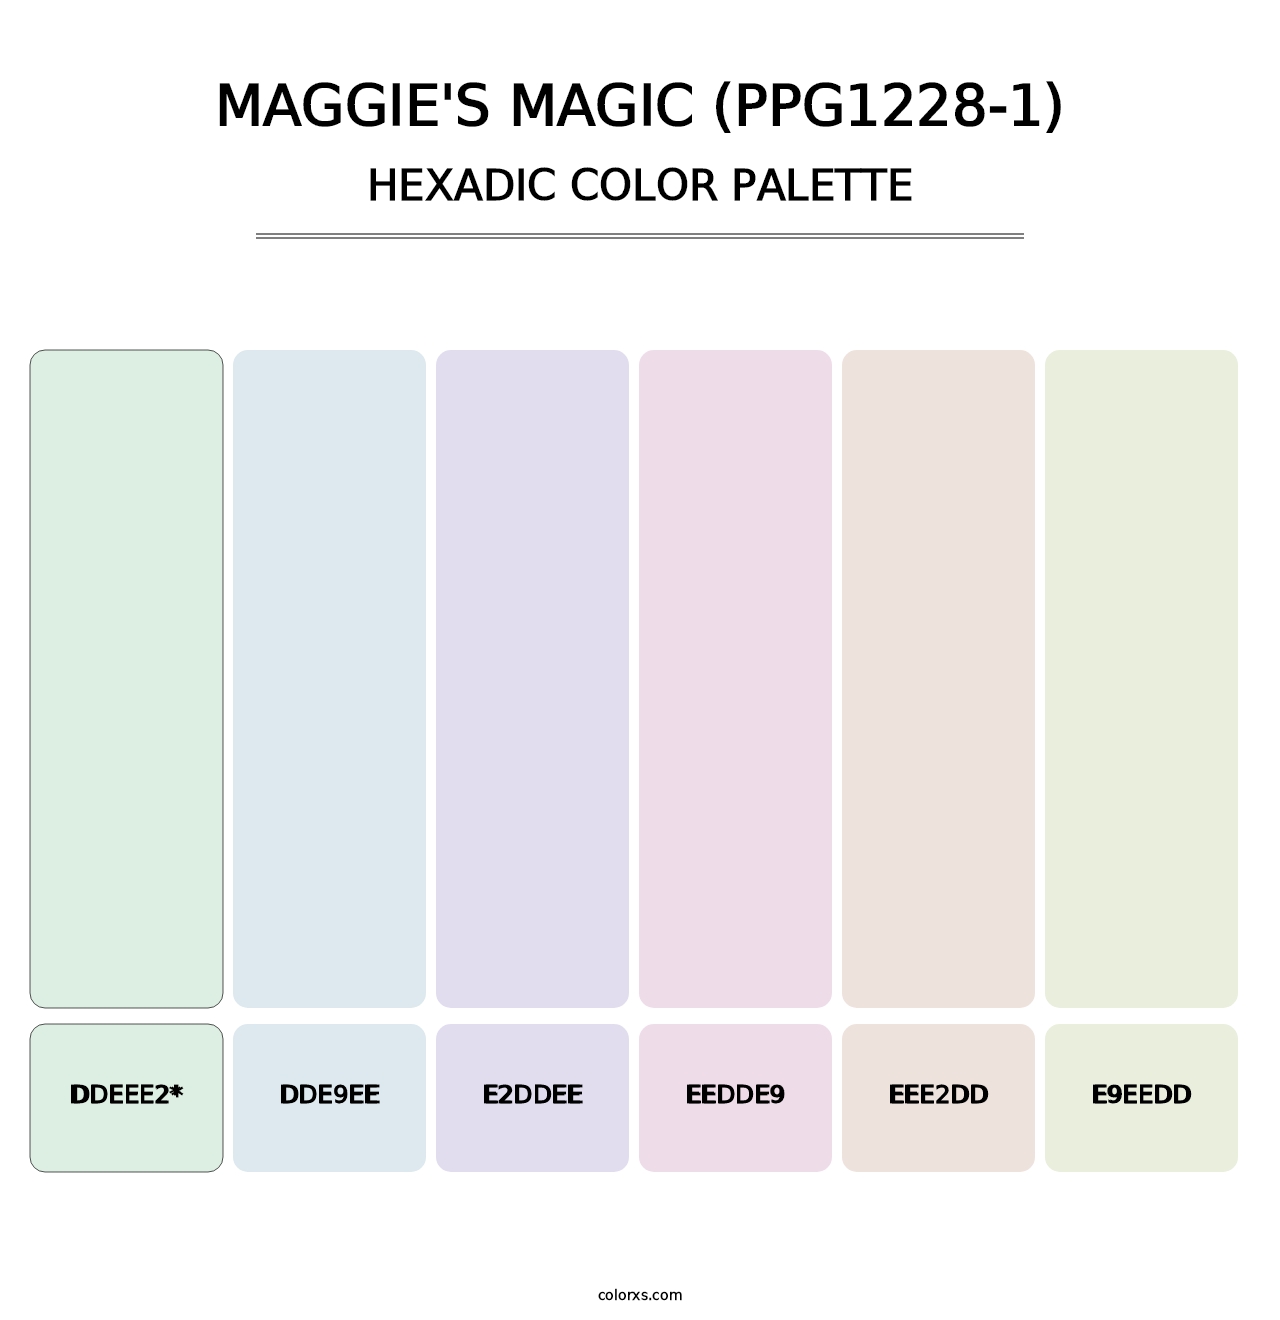 Maggie's Magic (PPG1228-1) - Hexadic Color Palette